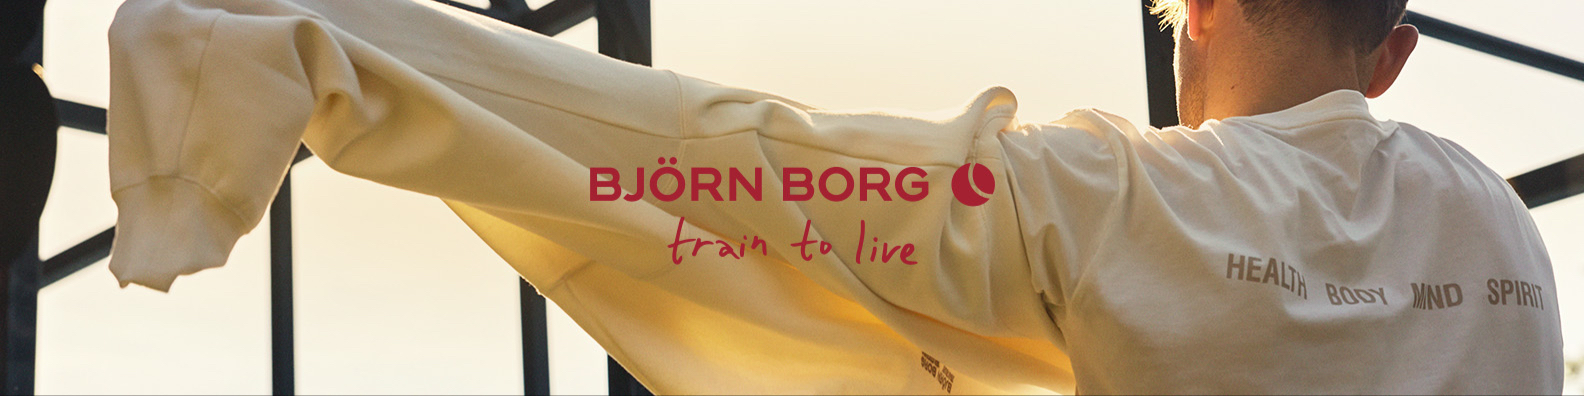 Björn Borg - www.bjornborg.com